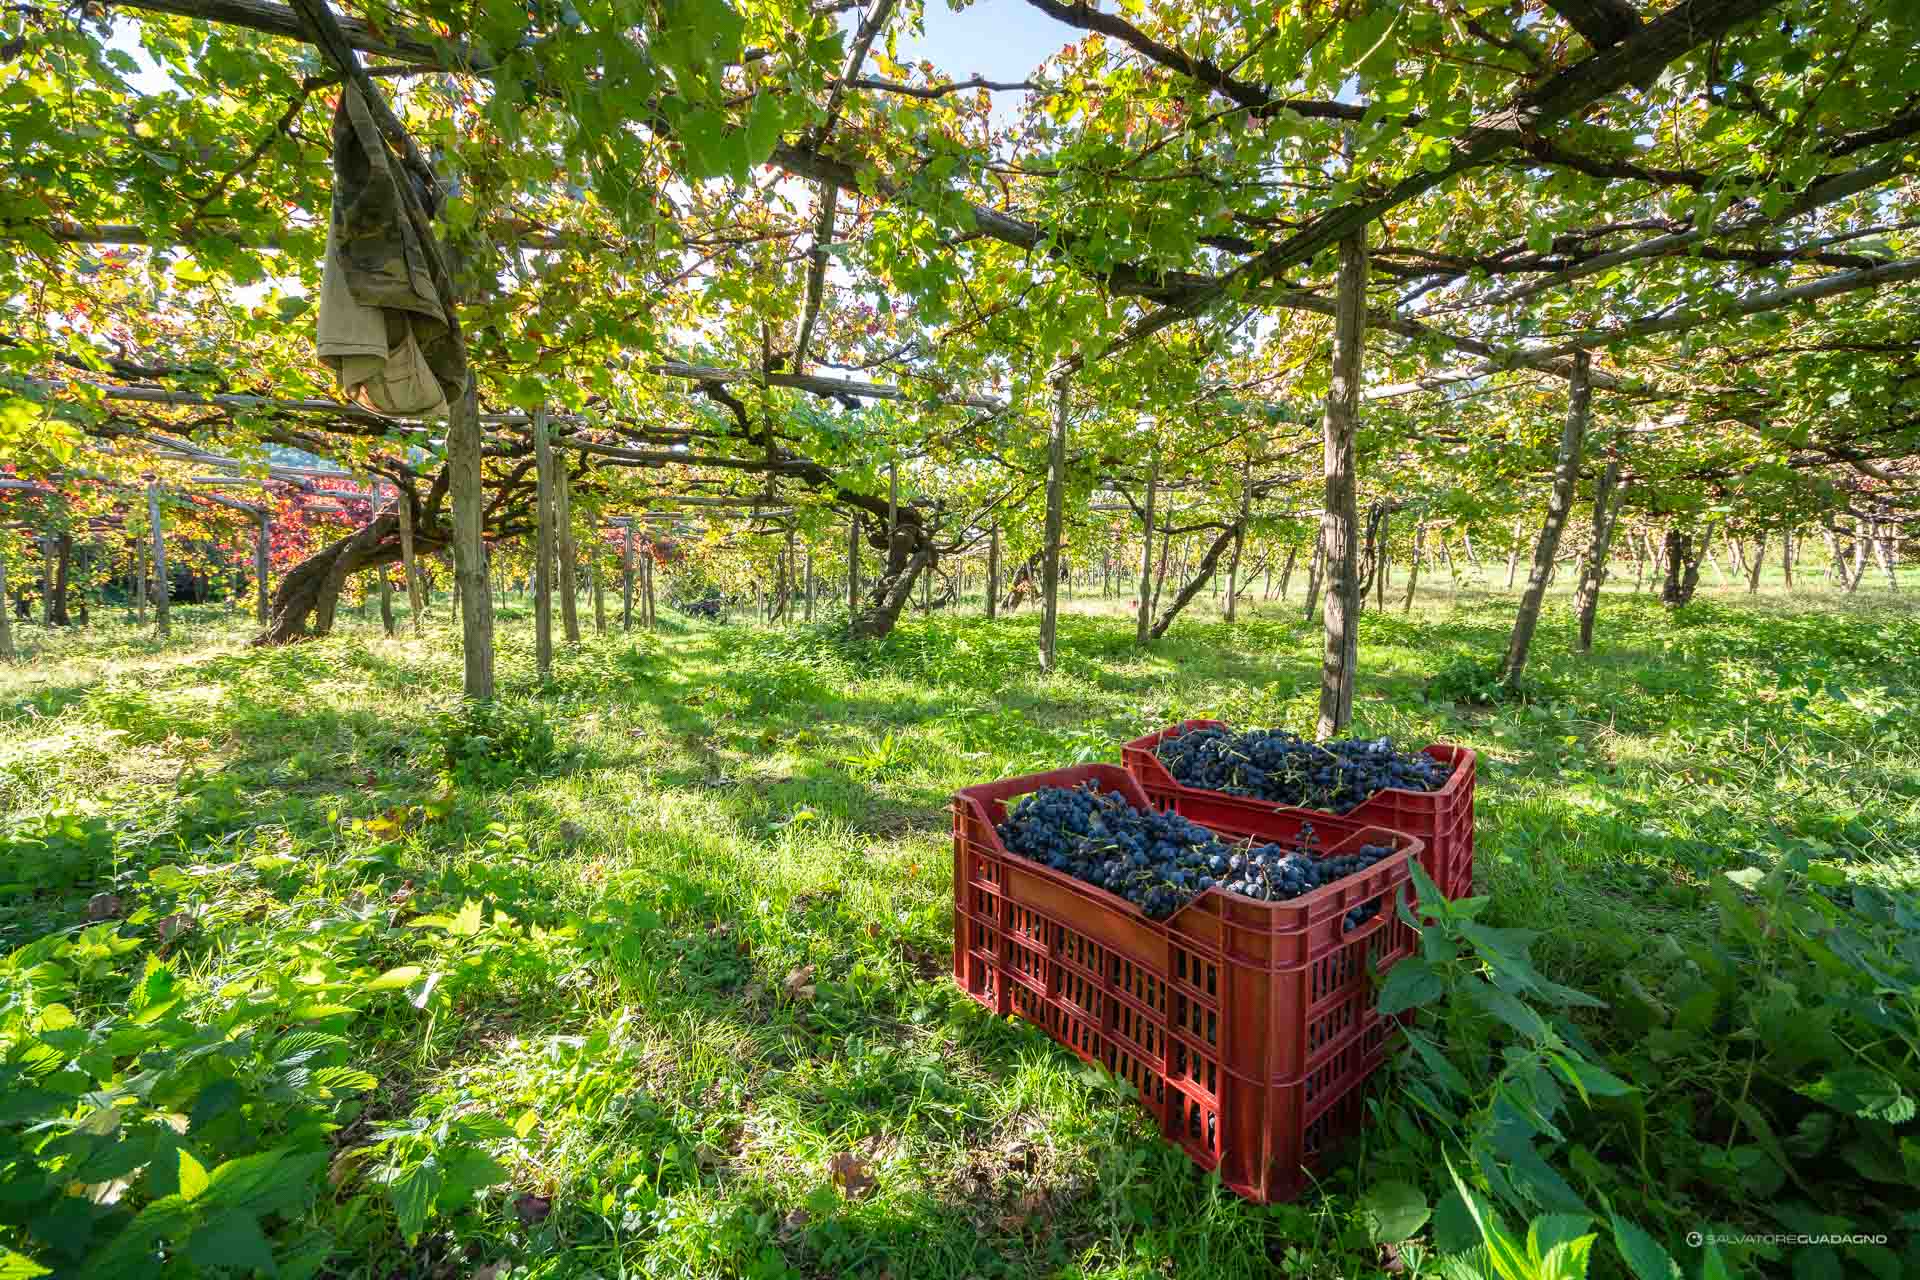 Vendemmia - Grape harvest - Cantine Reale - Tramonti - Authentic Amalfi Coast